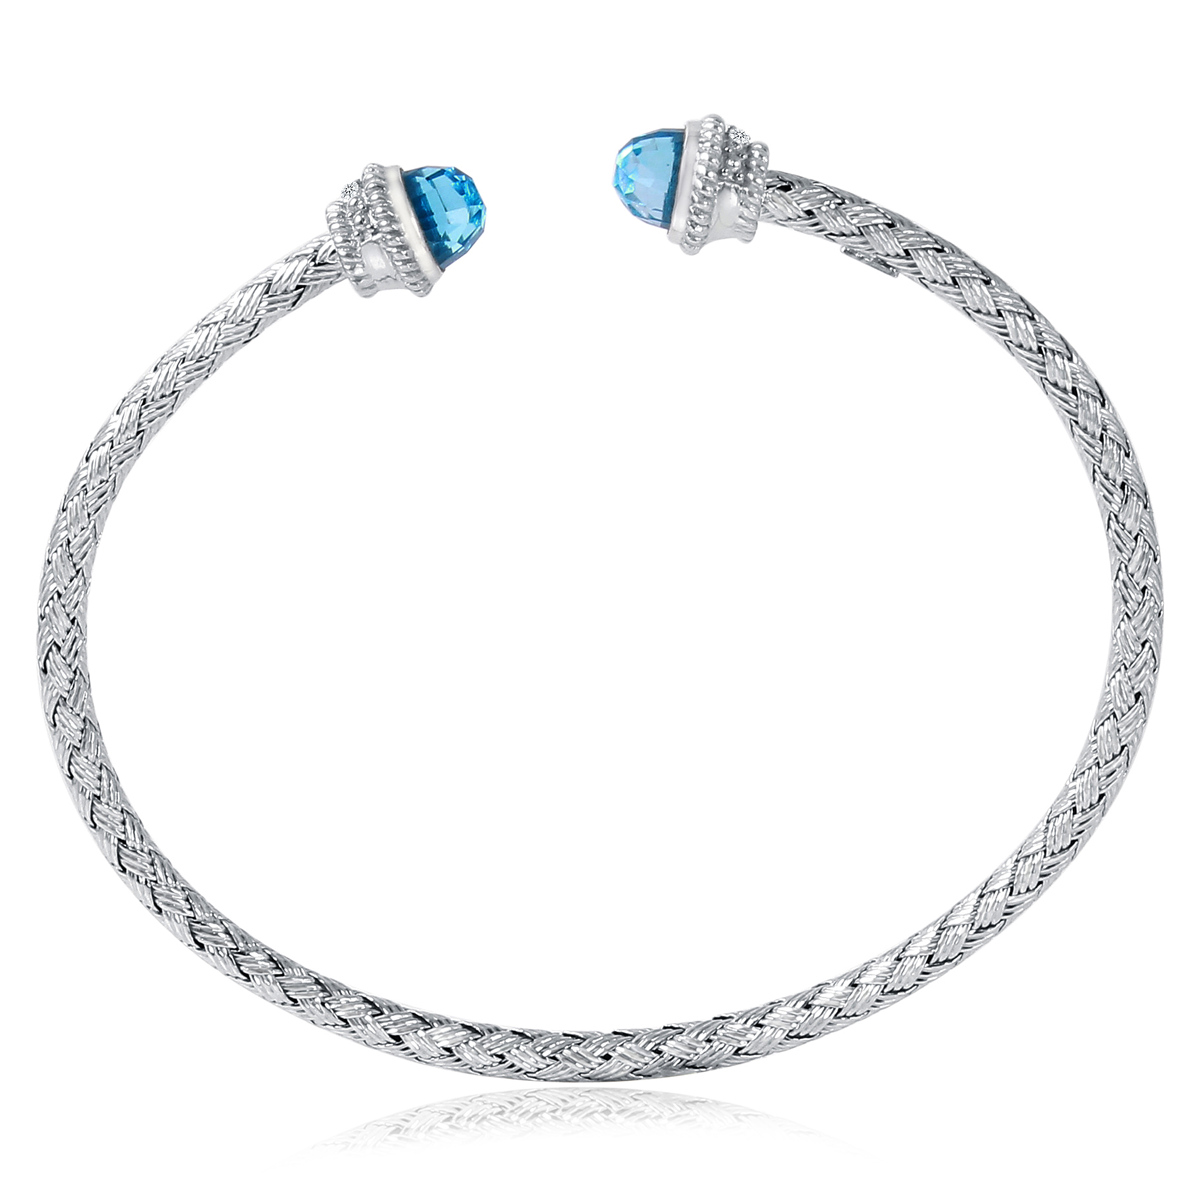 Sunset Blue Topaz w/Diamond Cuff Bracelet